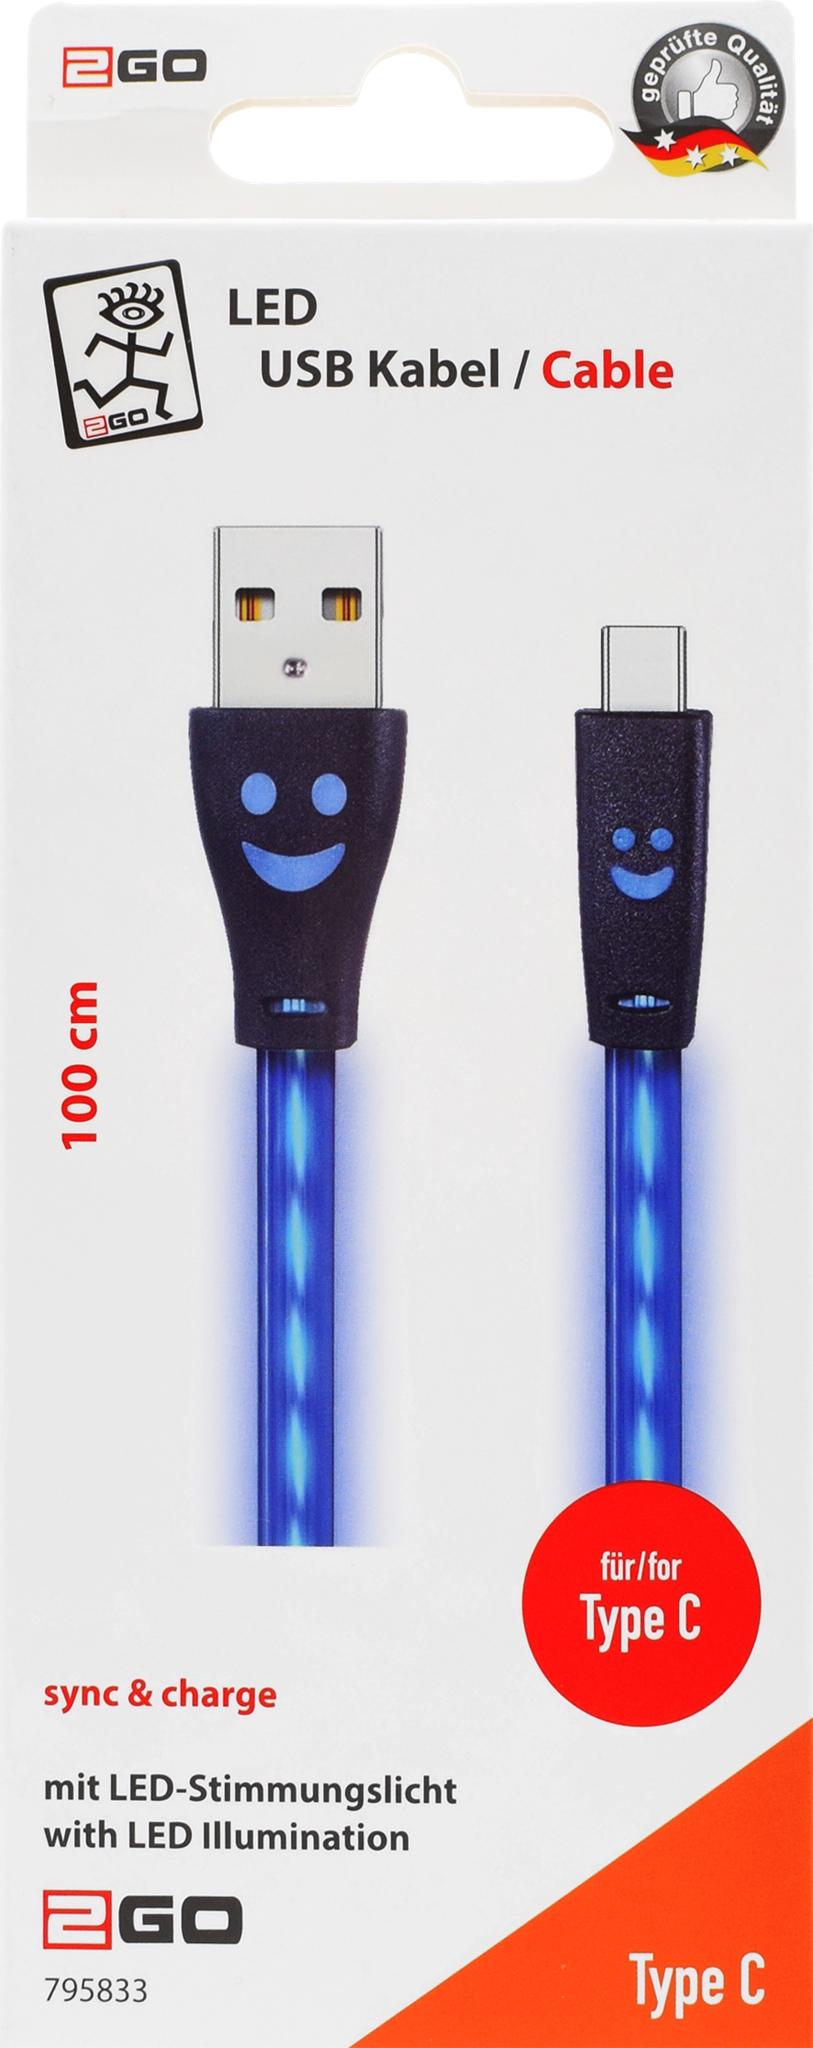 2GO Mobile.net - B2C -. USB Datenkabel - schwarz mit blauer LED